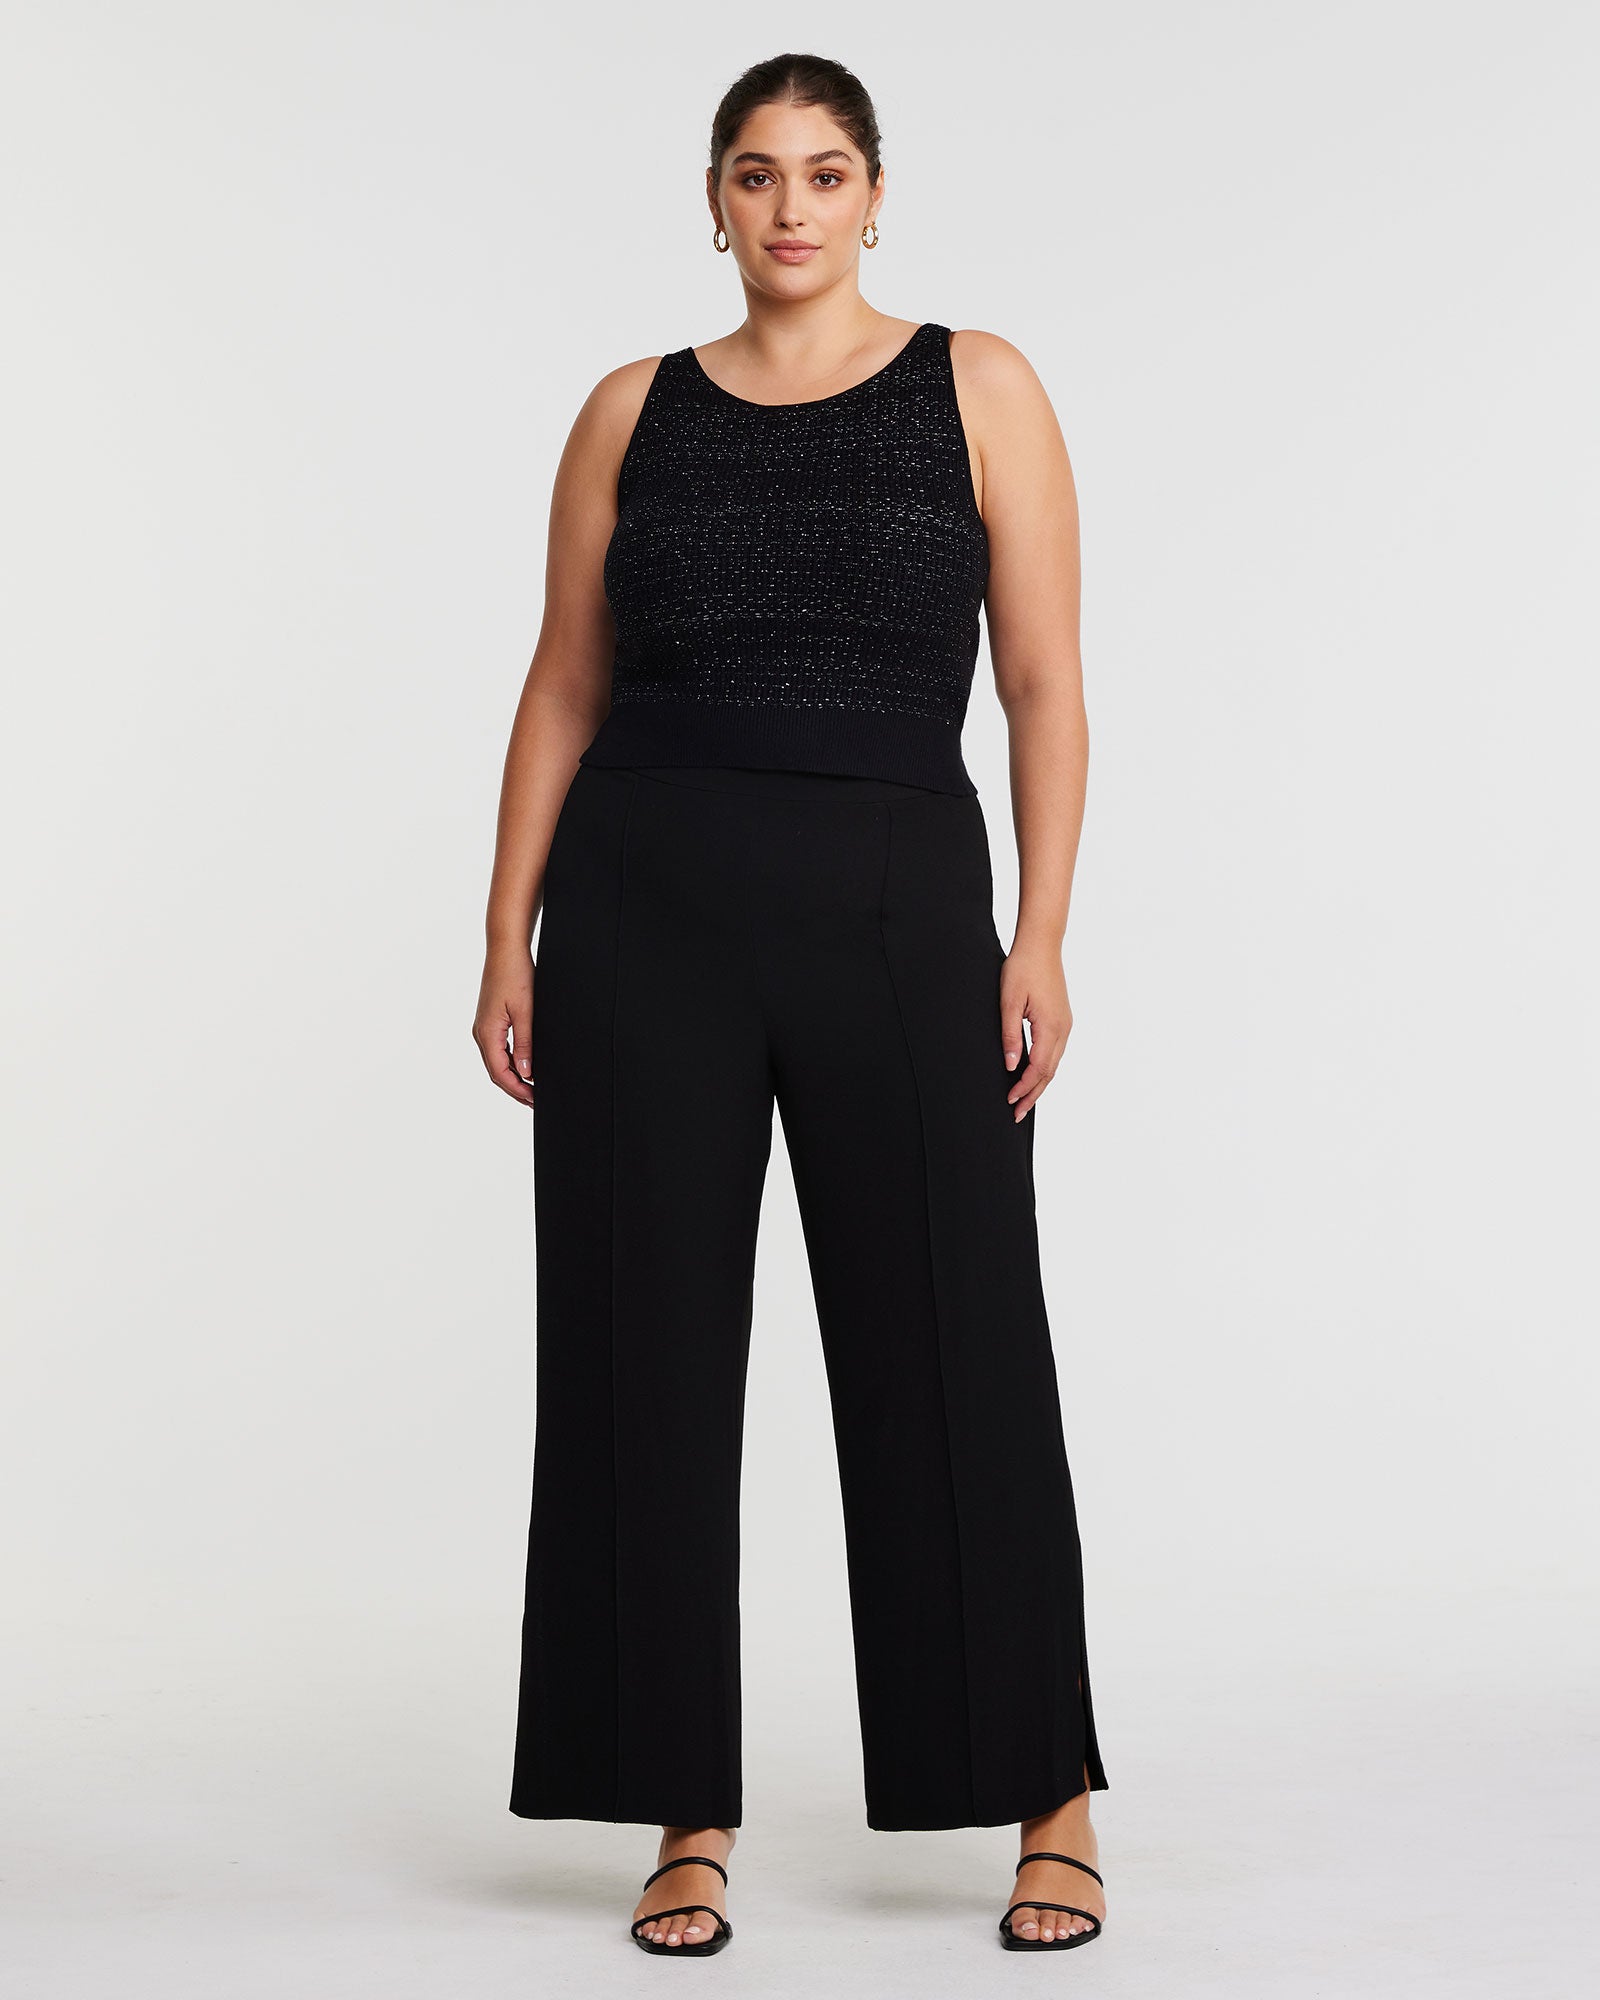 A plus size woman wearing black wide leg pants and an Abbey Knit Top.